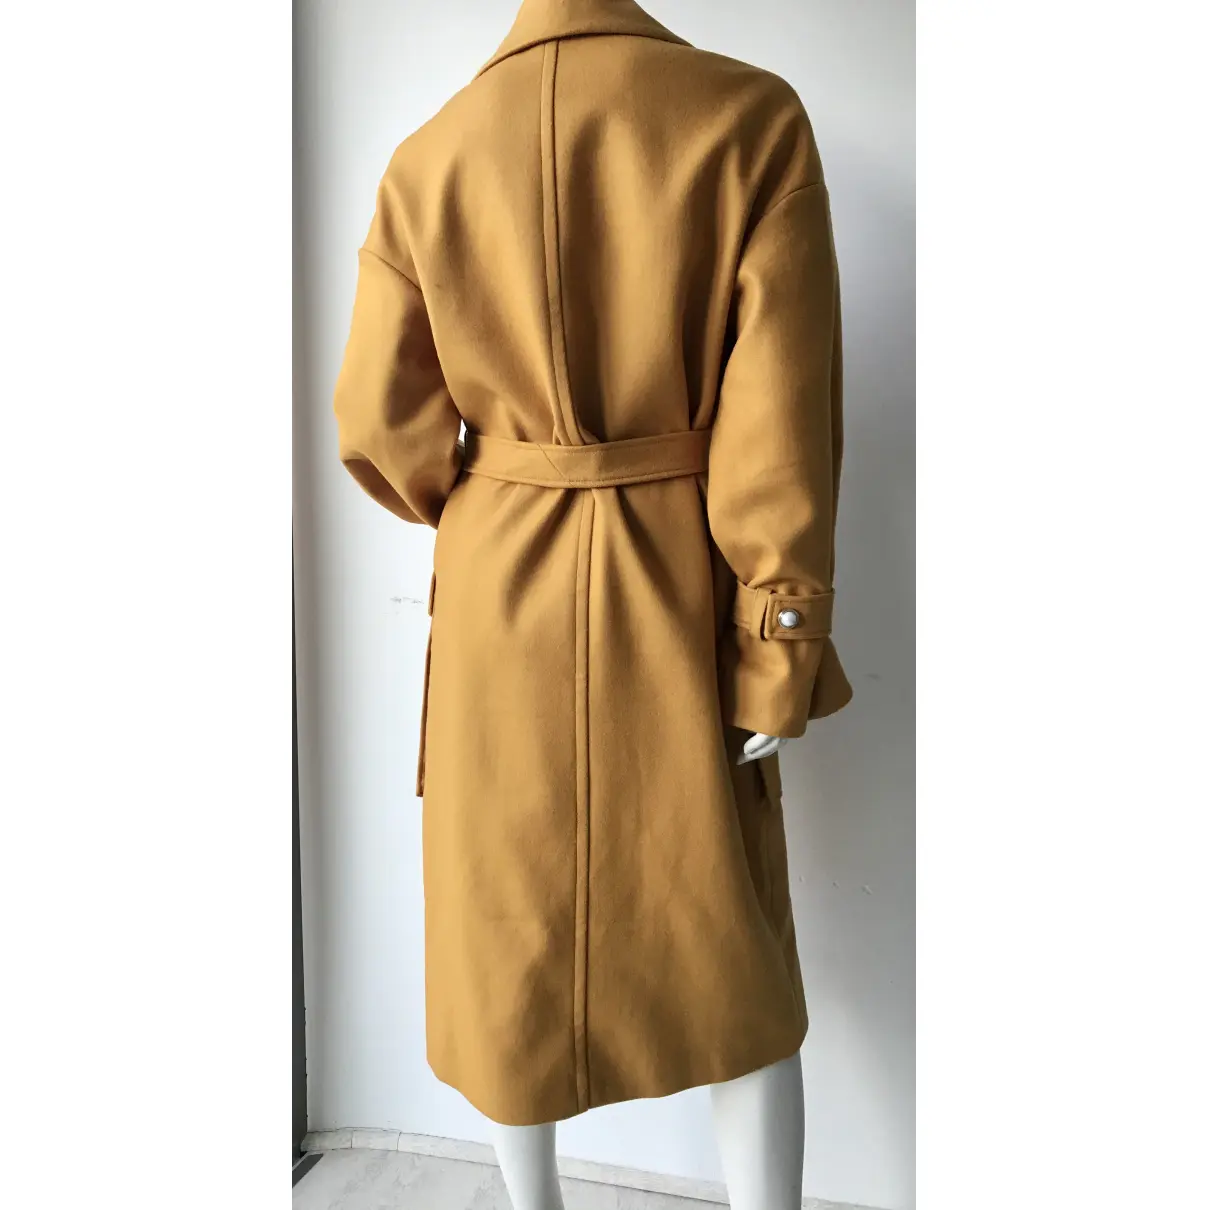 Buy Mother Of Pearl Wool coat online